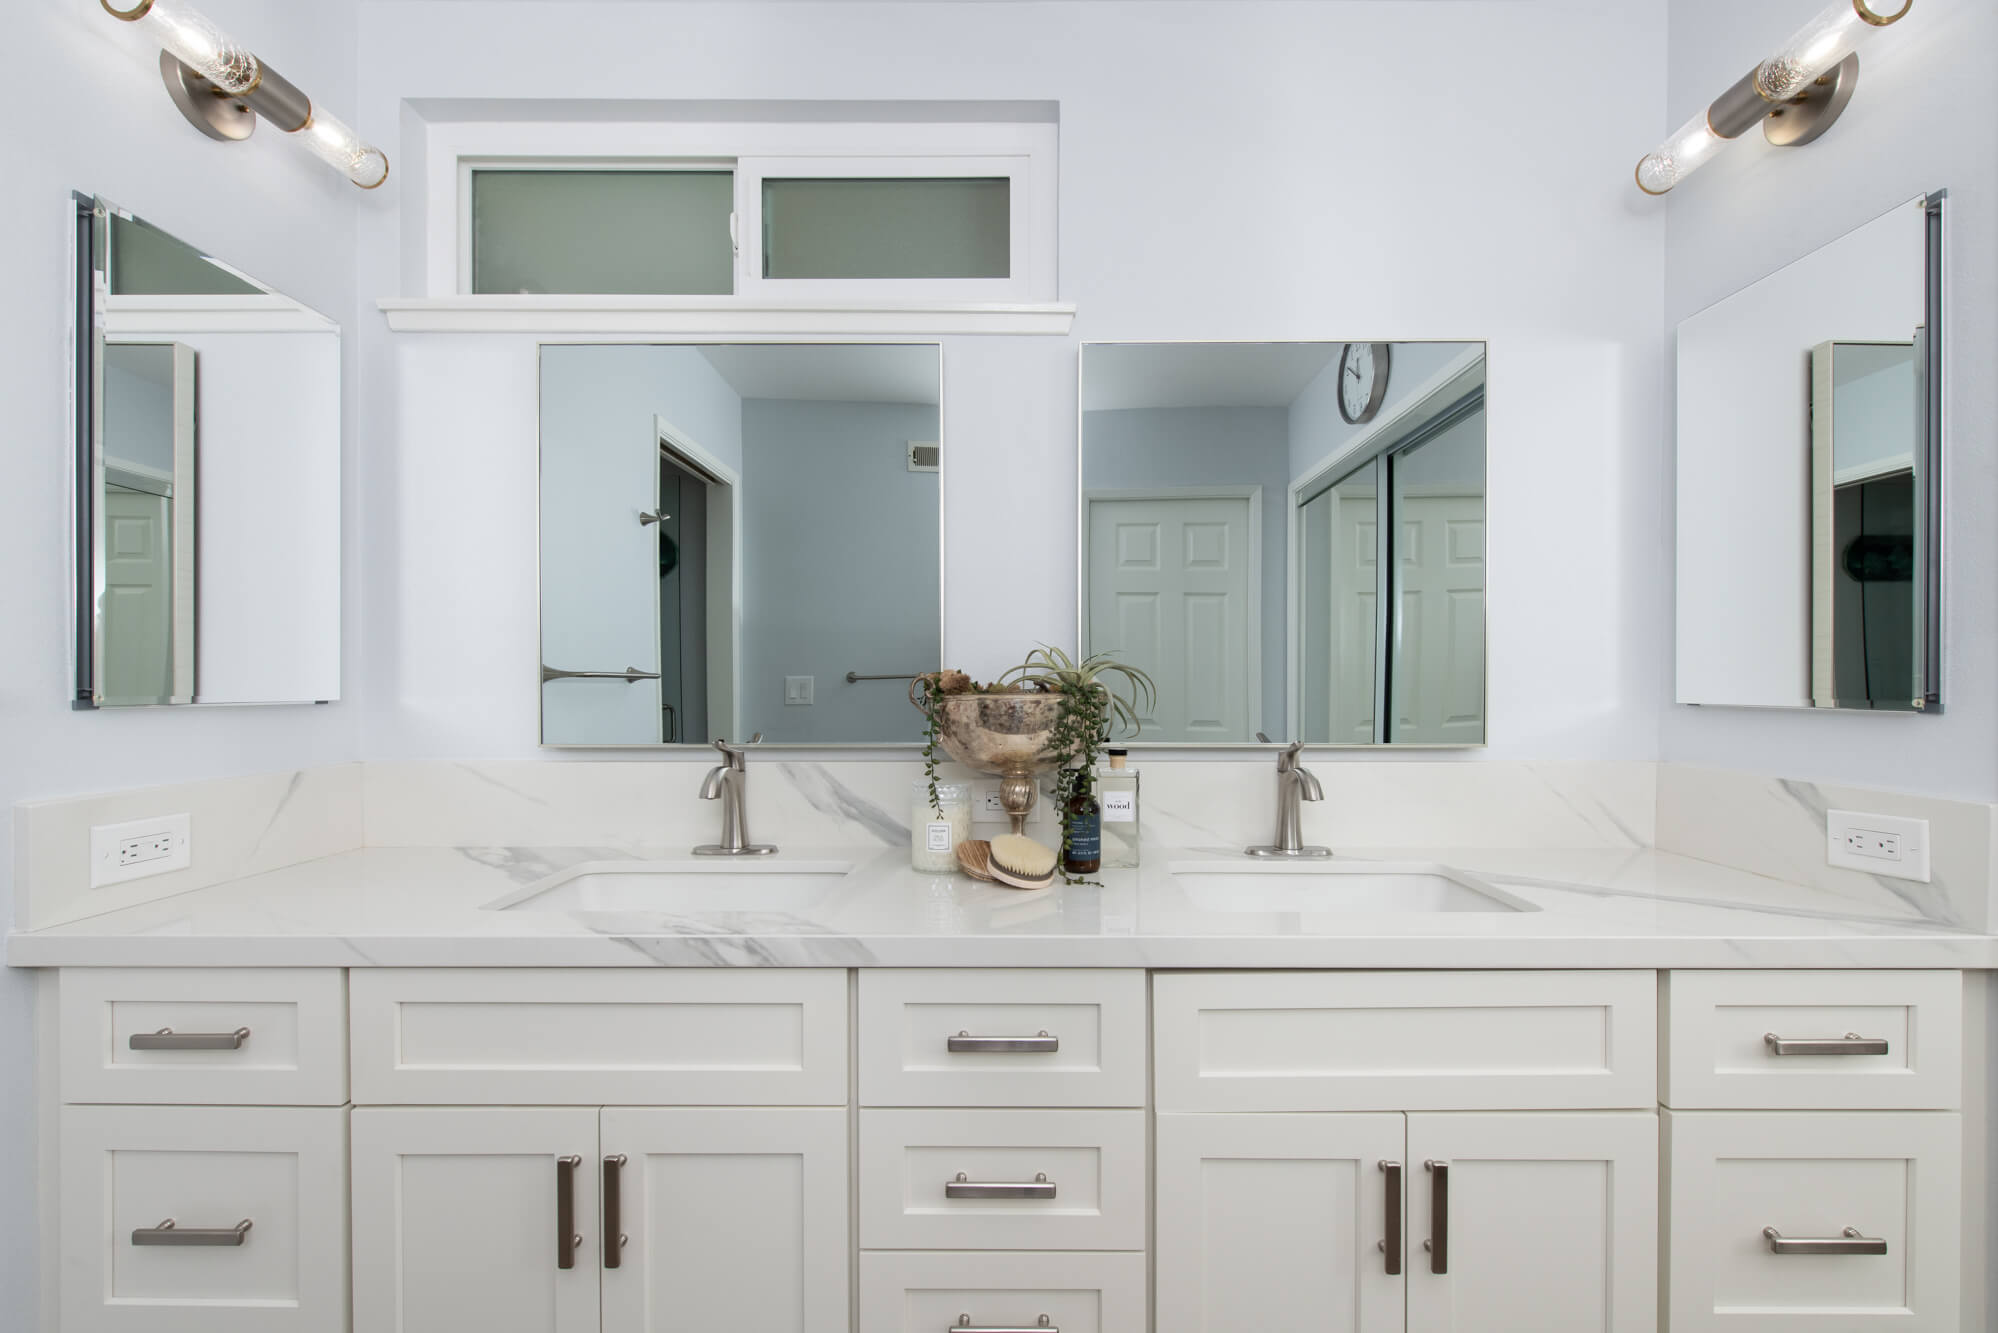 Double sinks in Huntington Beach bathroom remodel adds resale value